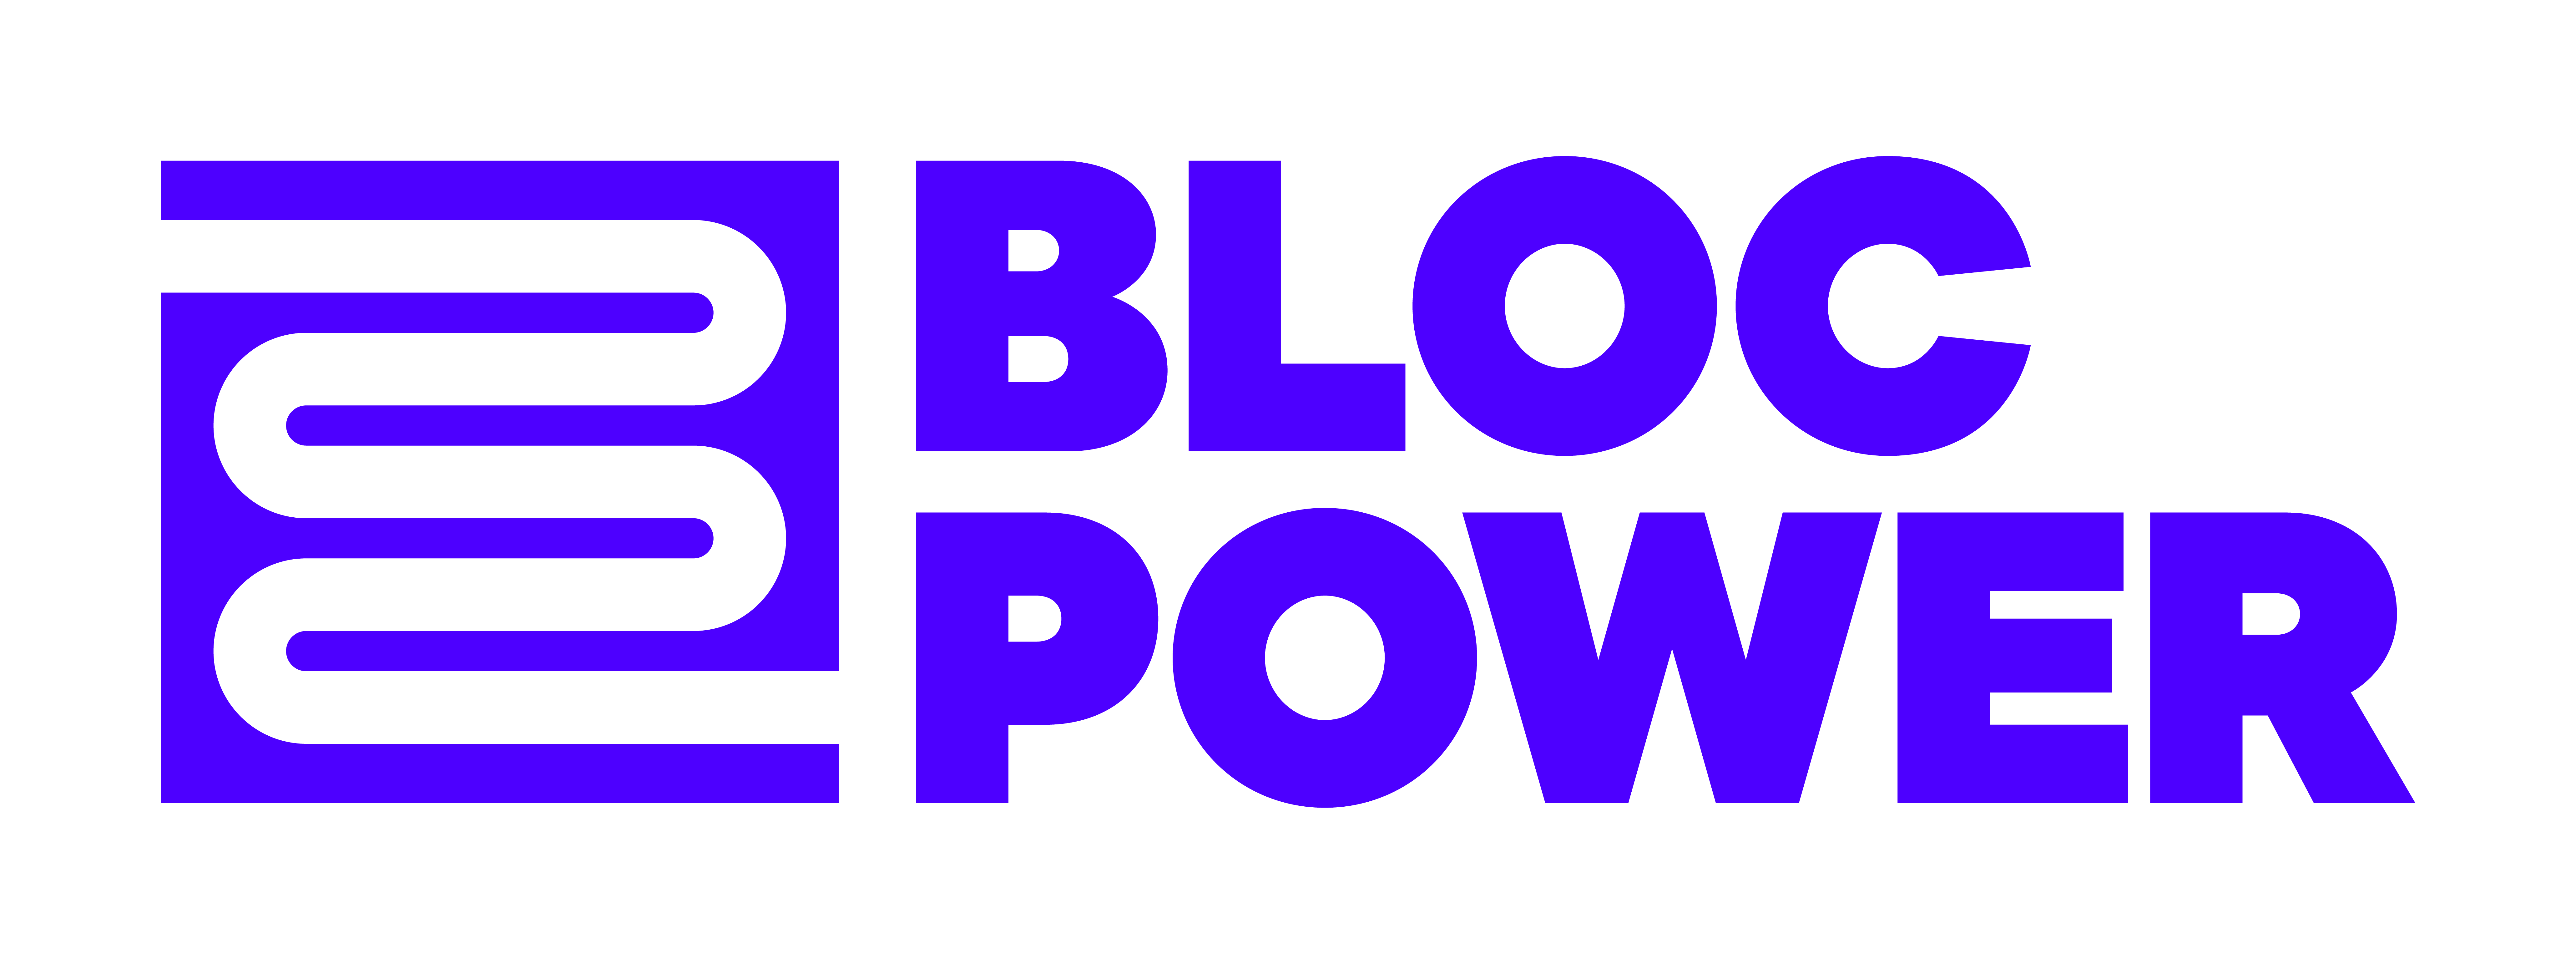 BlocPower